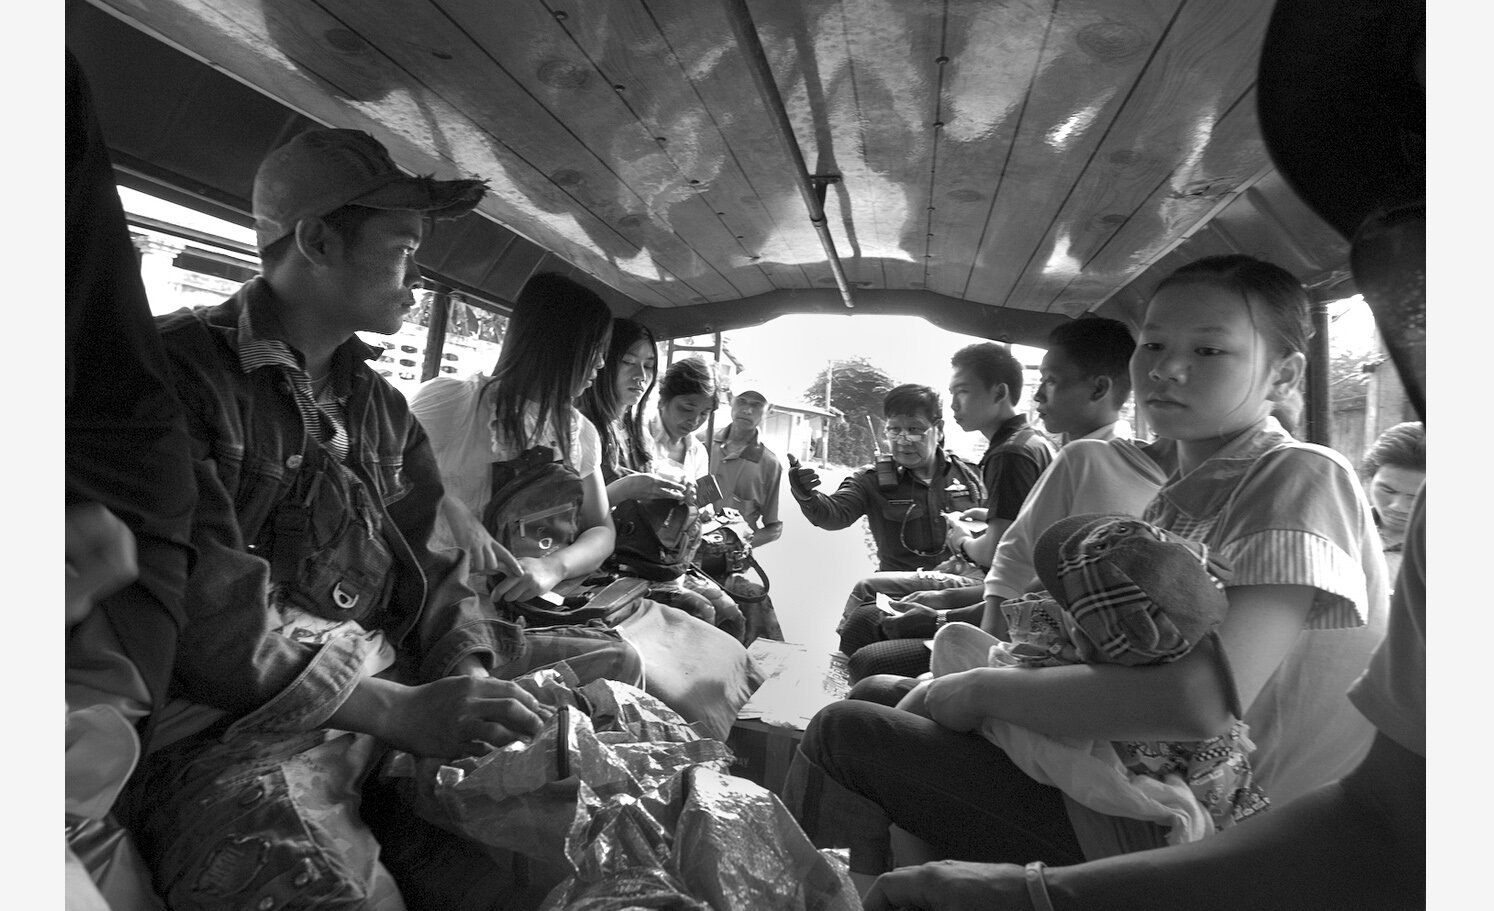 Burma-crossing-checkpoint-carey_russell.jpg